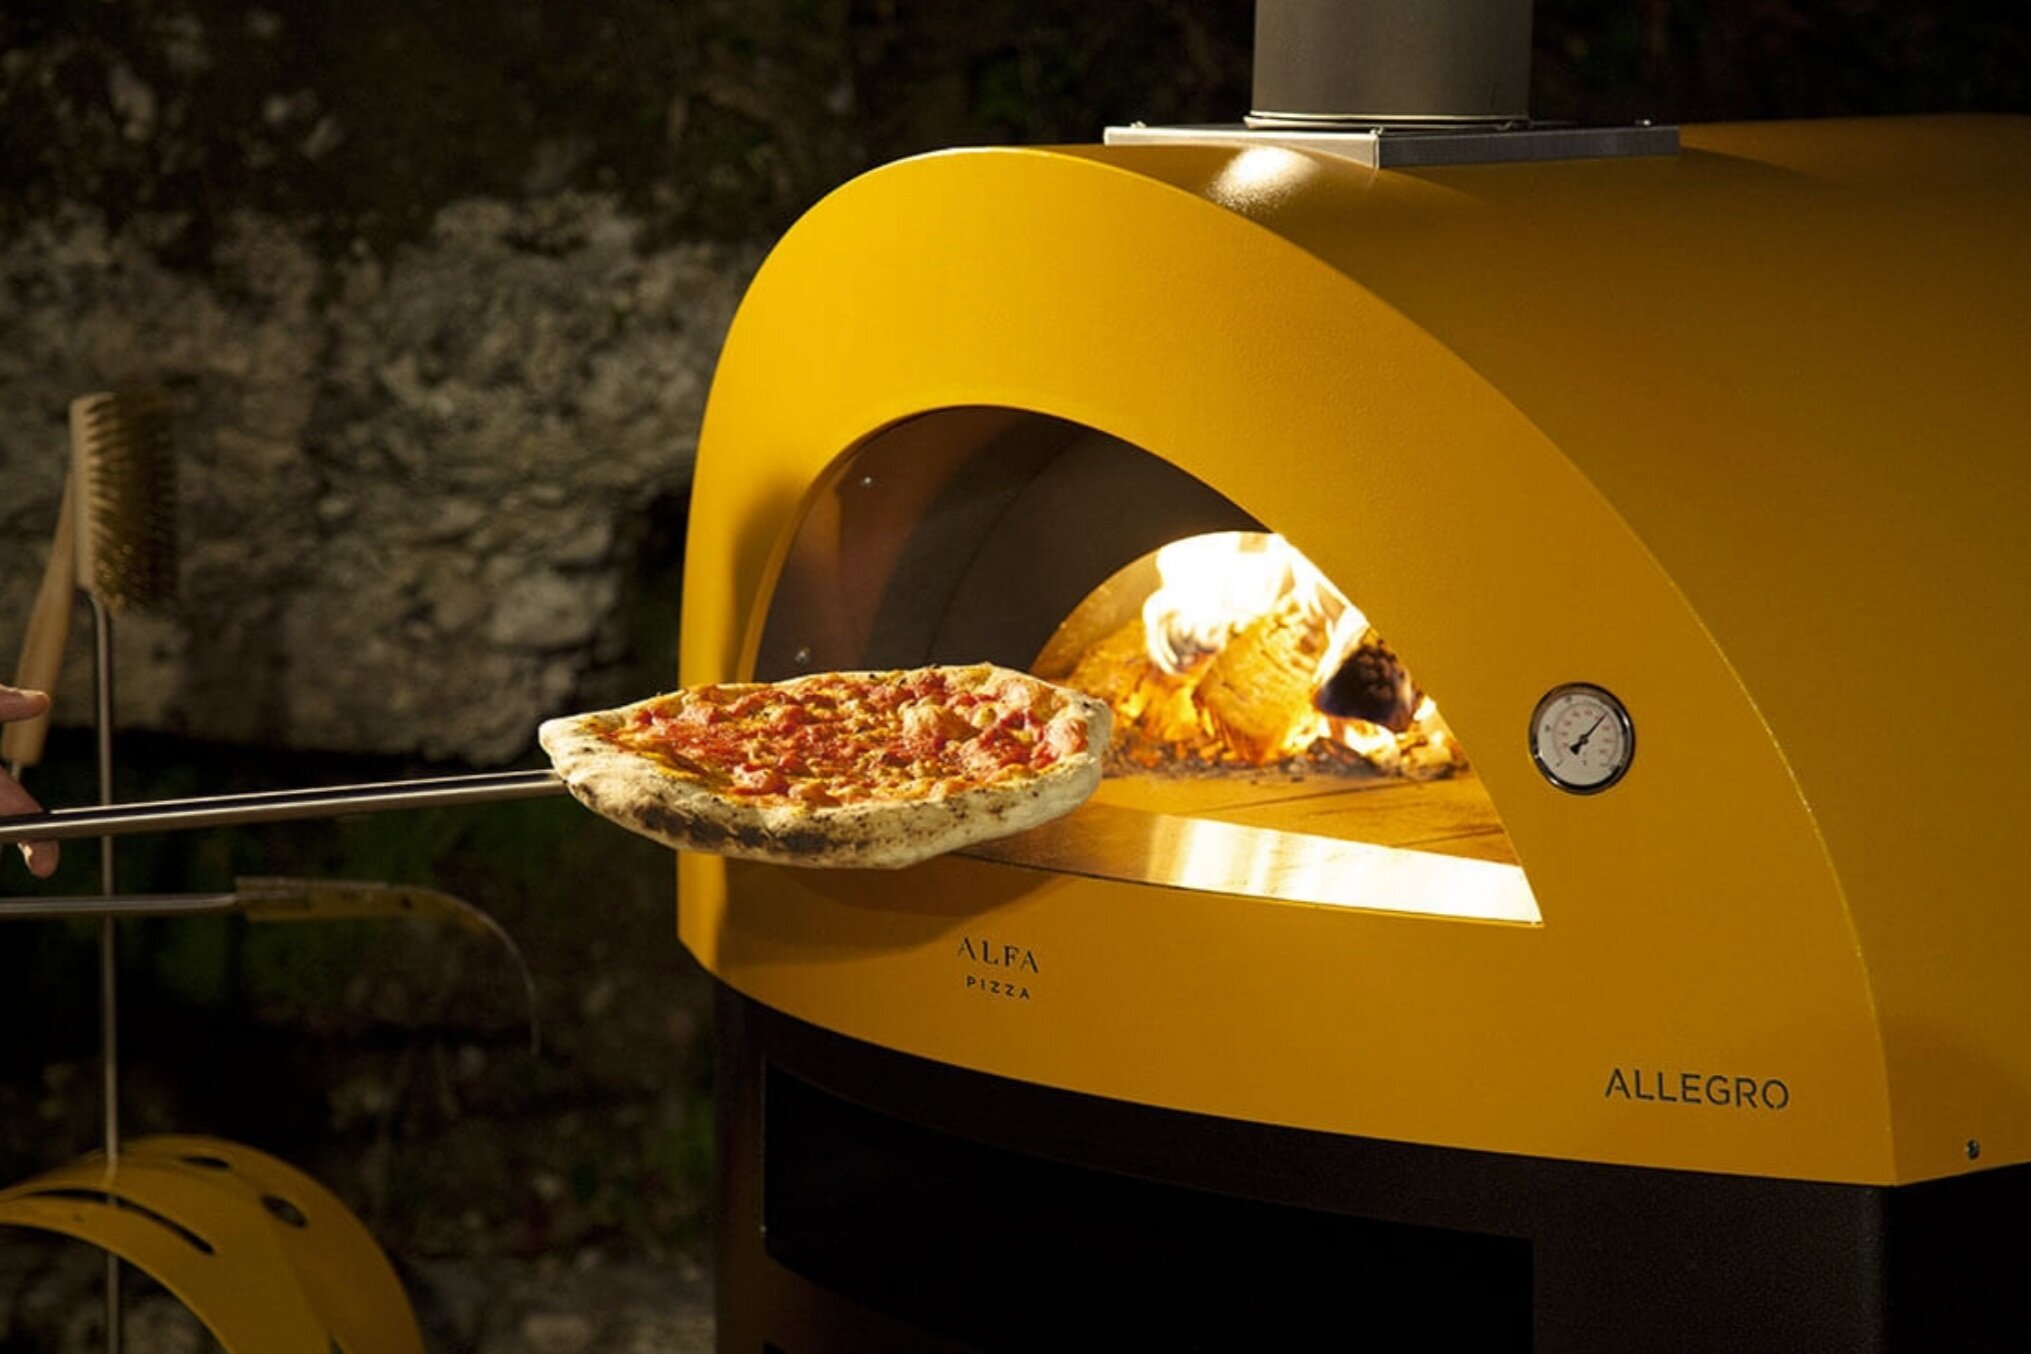 Alfa+pizza+oven2.jpg